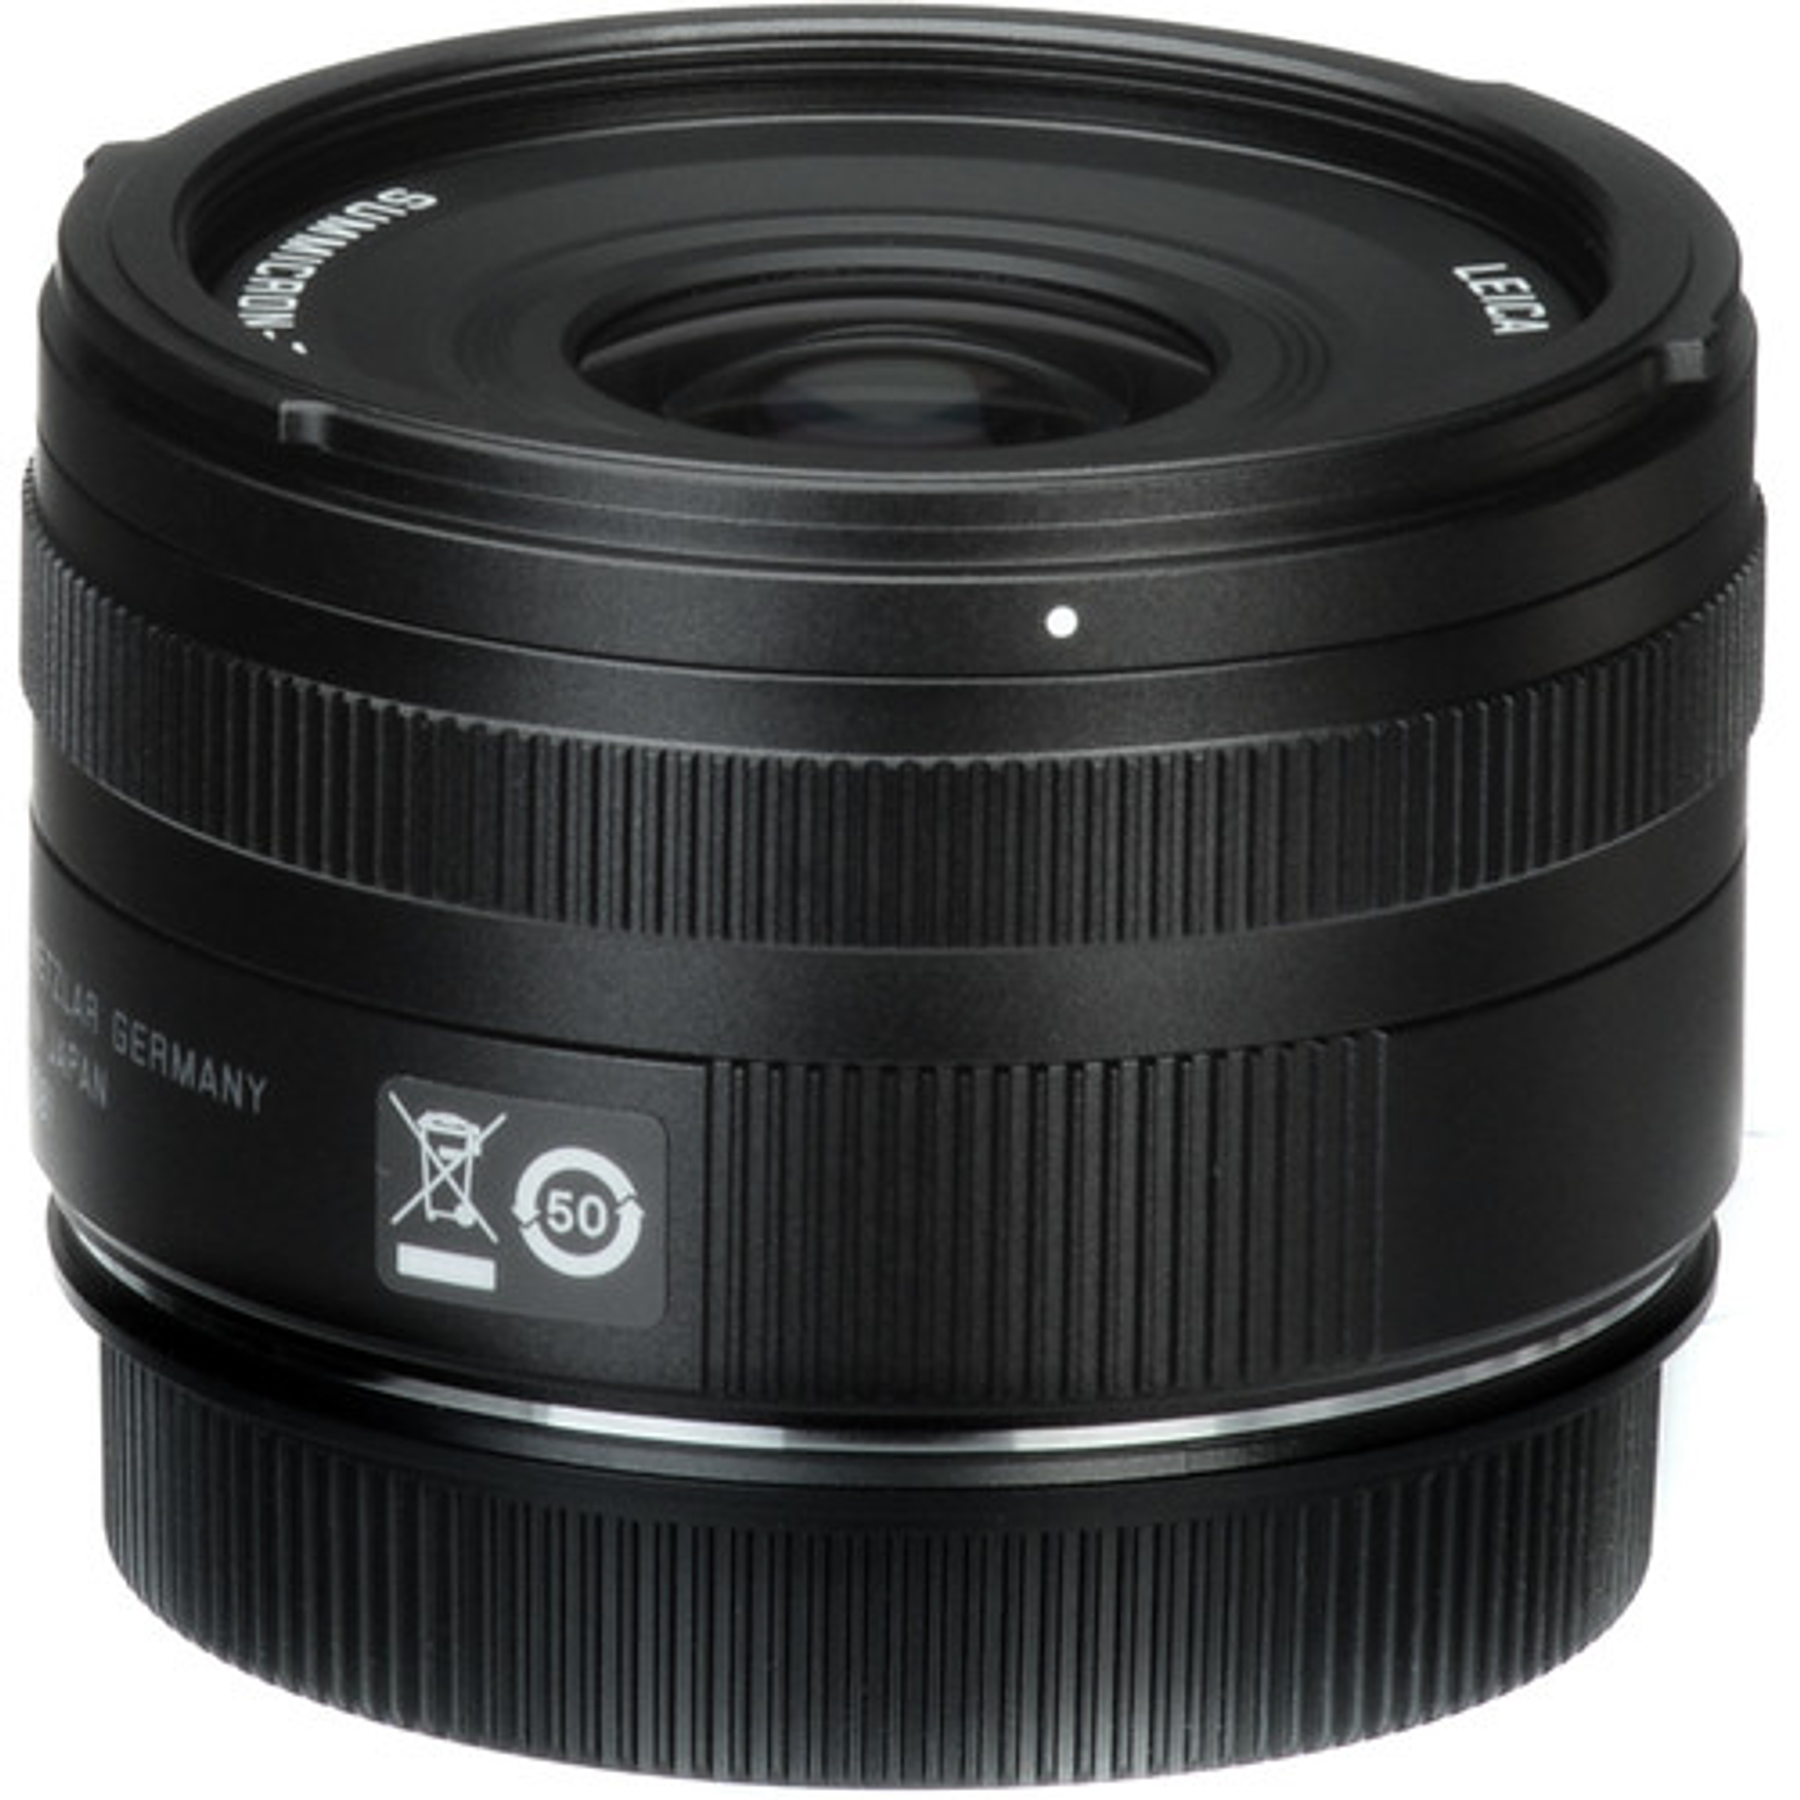 Leica Summicron-T 23mm f/2 ASPH